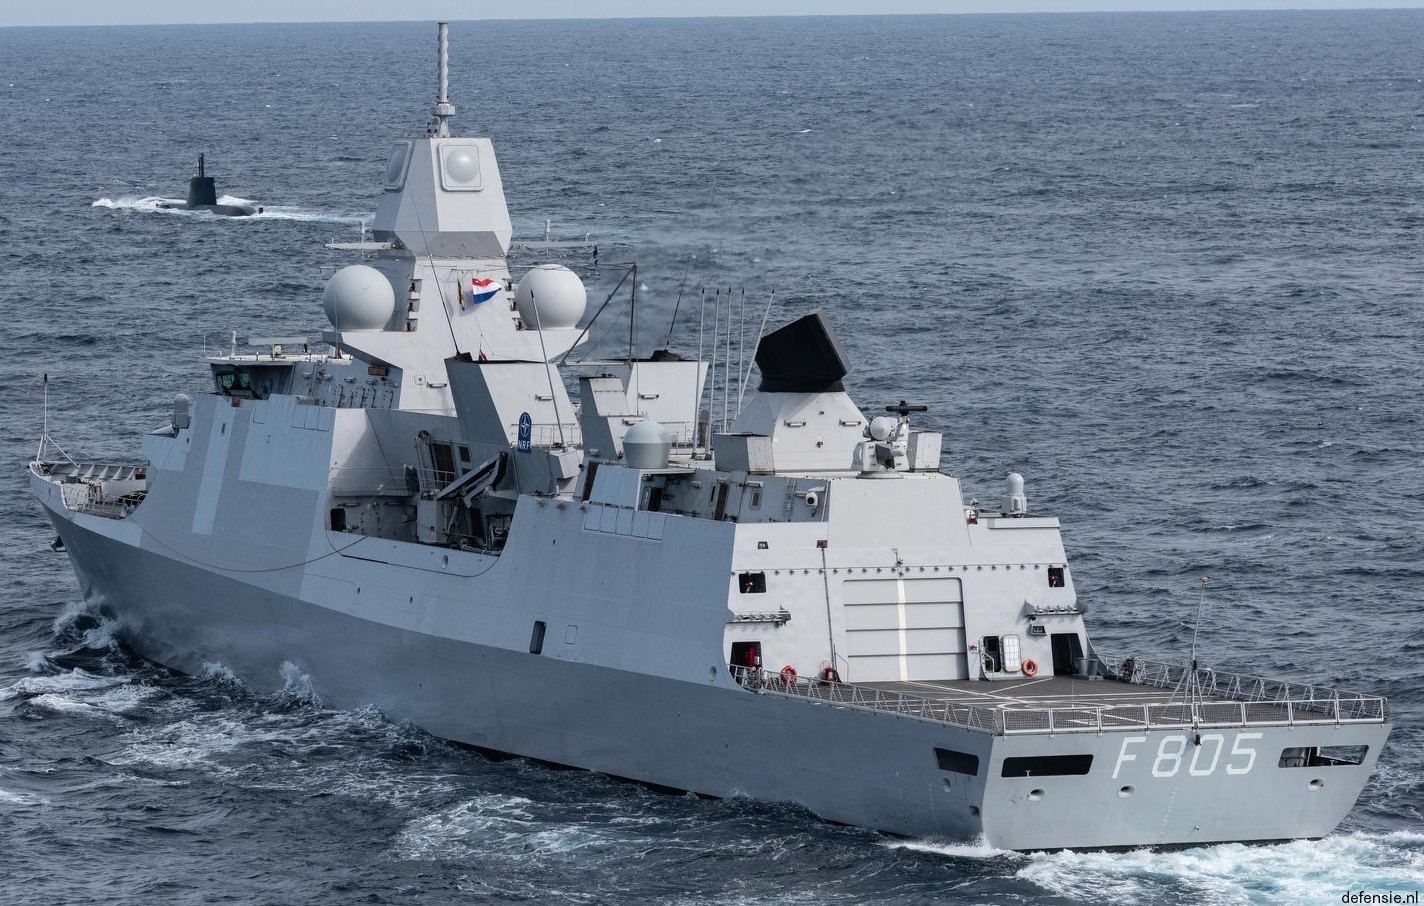 f-805 hnlms evertsen guided missile frigate ffg lcf royal netherlands navy 22